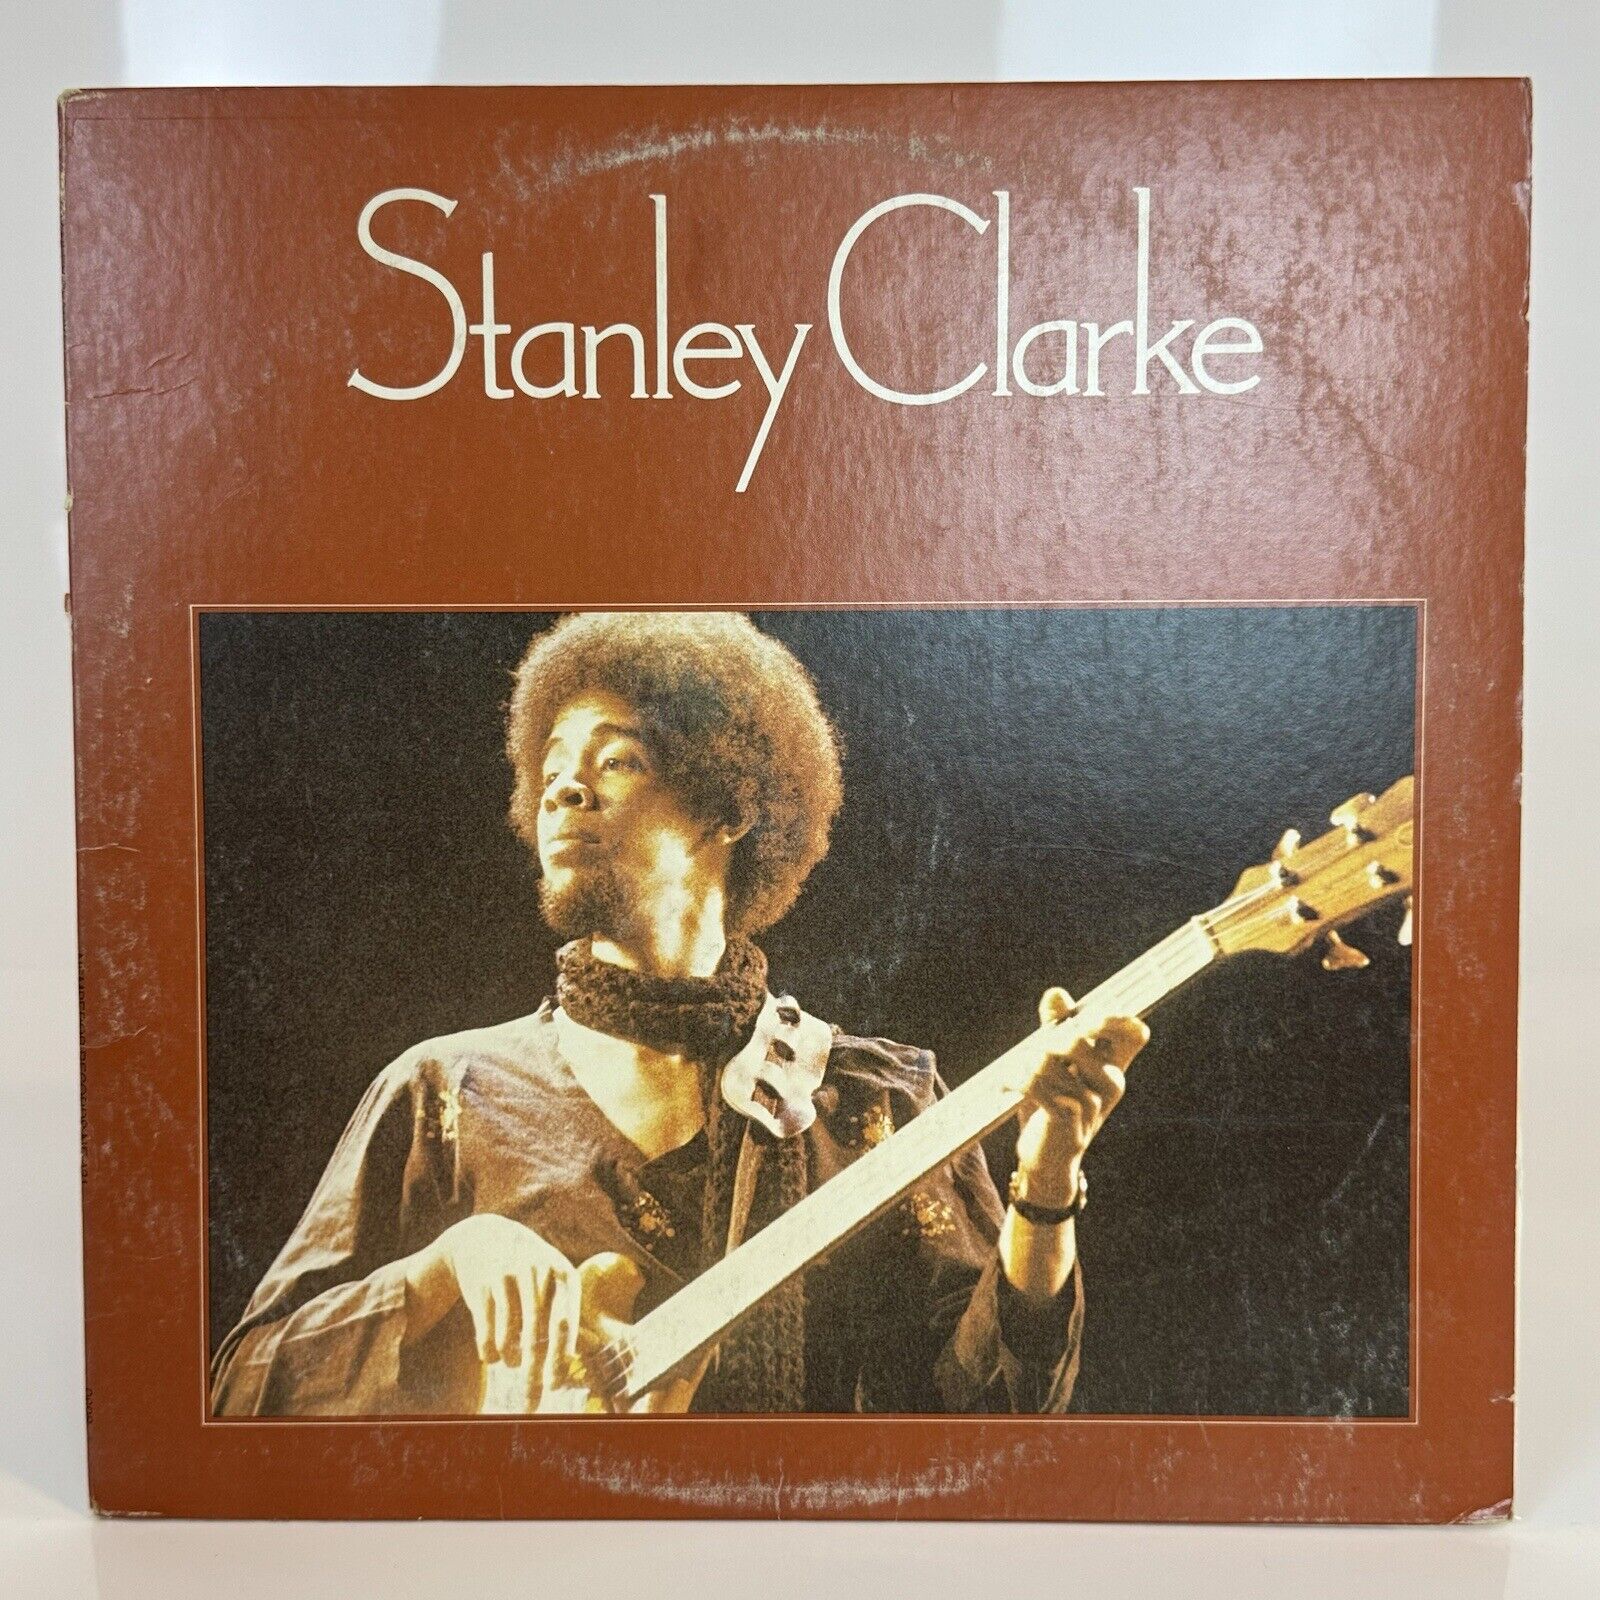 Stanley Clarke Self-Titled Stanley Clarke LP Vinyl Record 1974 Nemperor Records